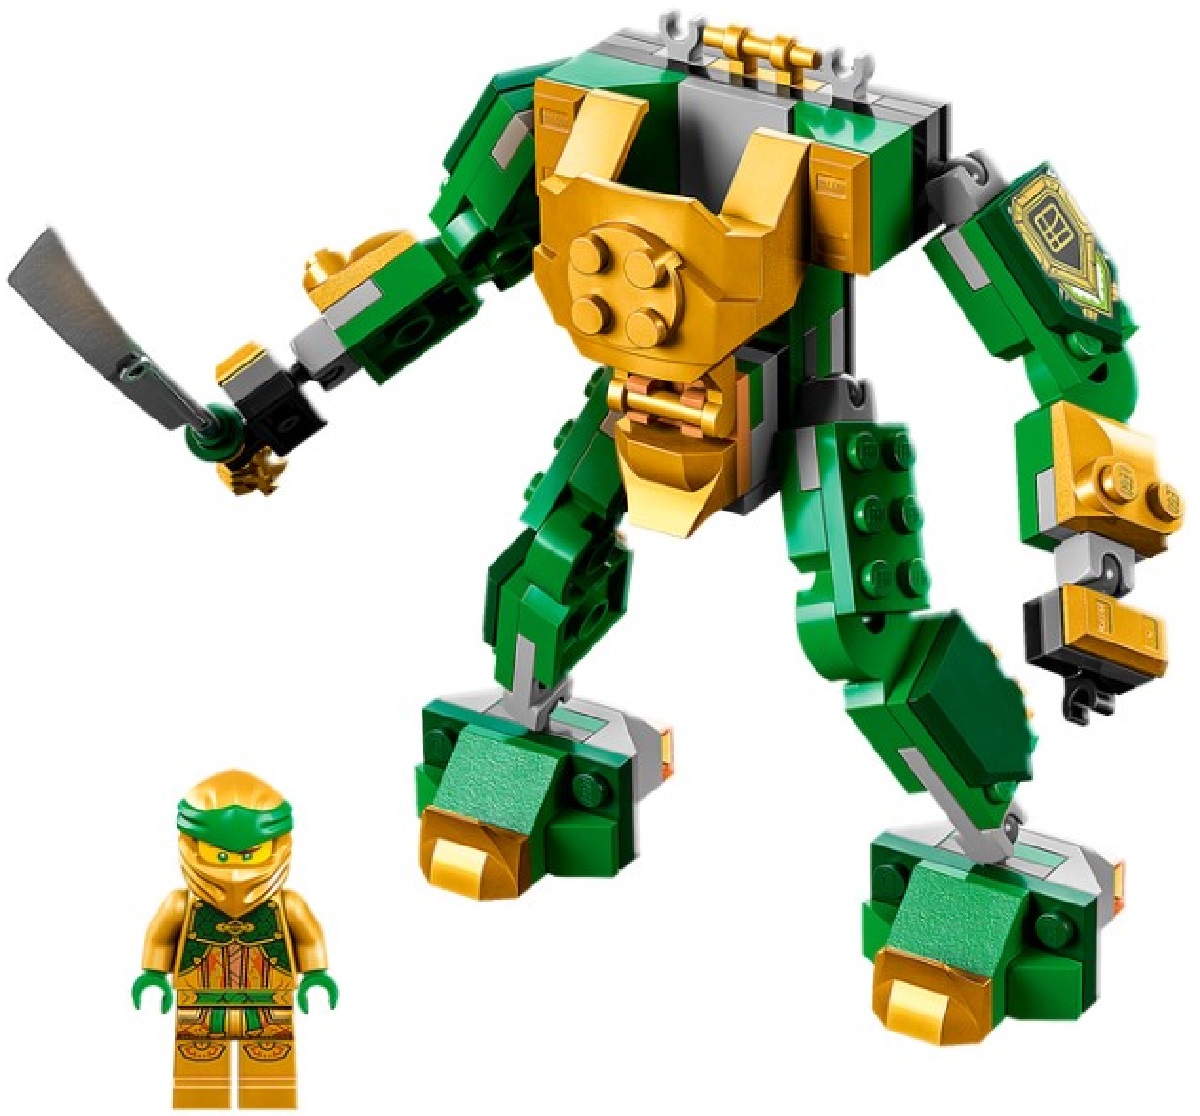 Lego Ninjago. Lupta cu robotul Evo al lui Lloyd